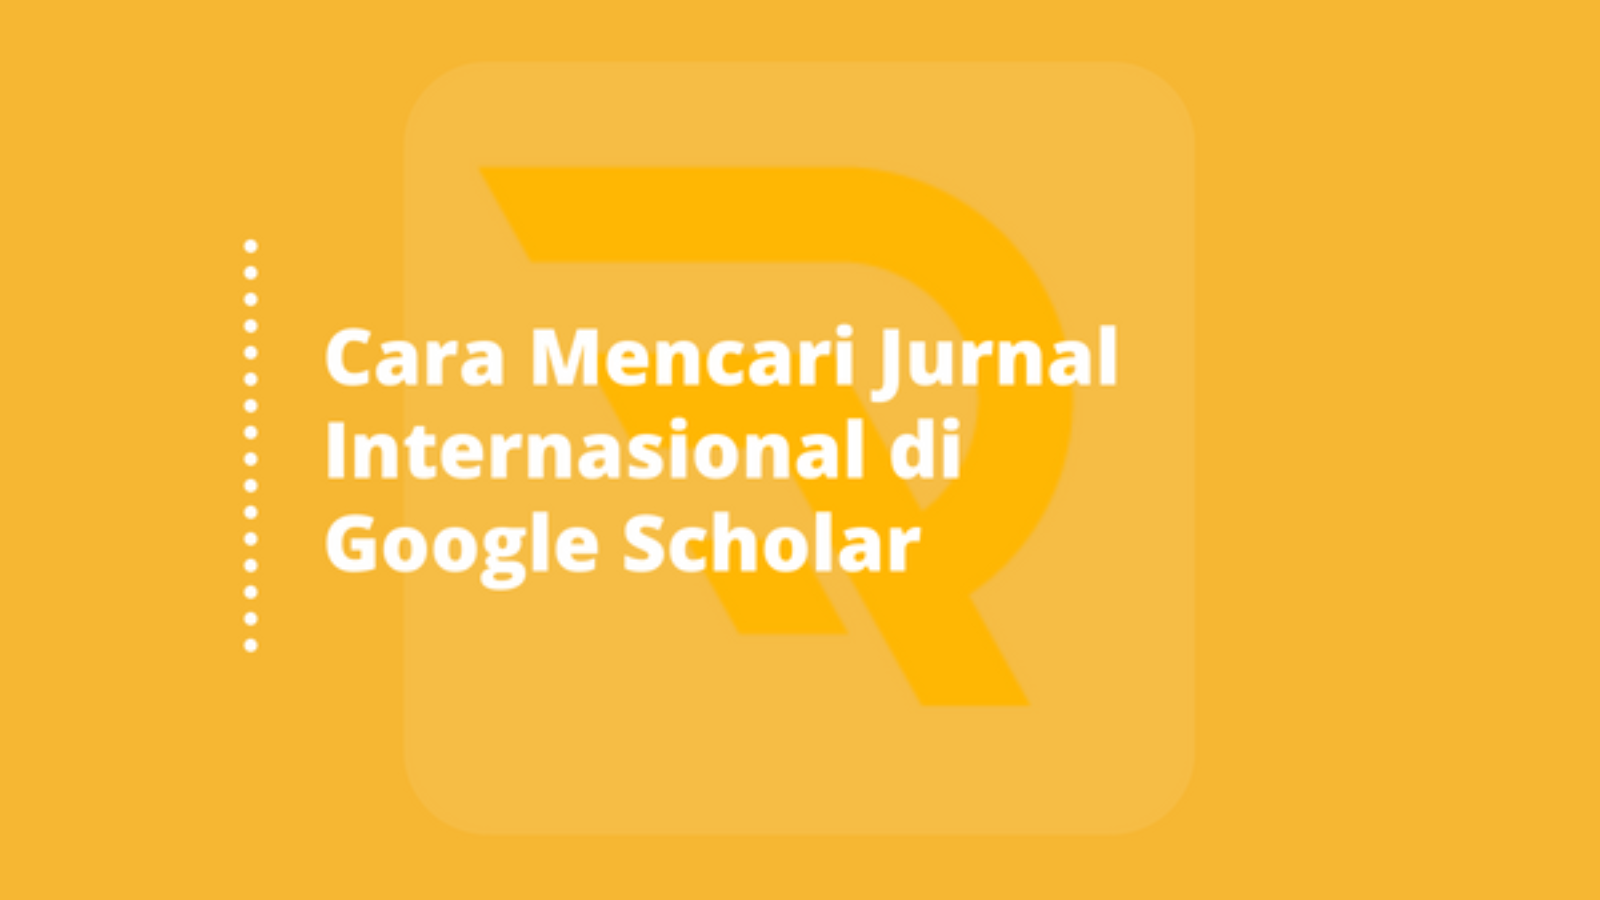 Cara Mencari Jurnal Internasional di Google Scholar